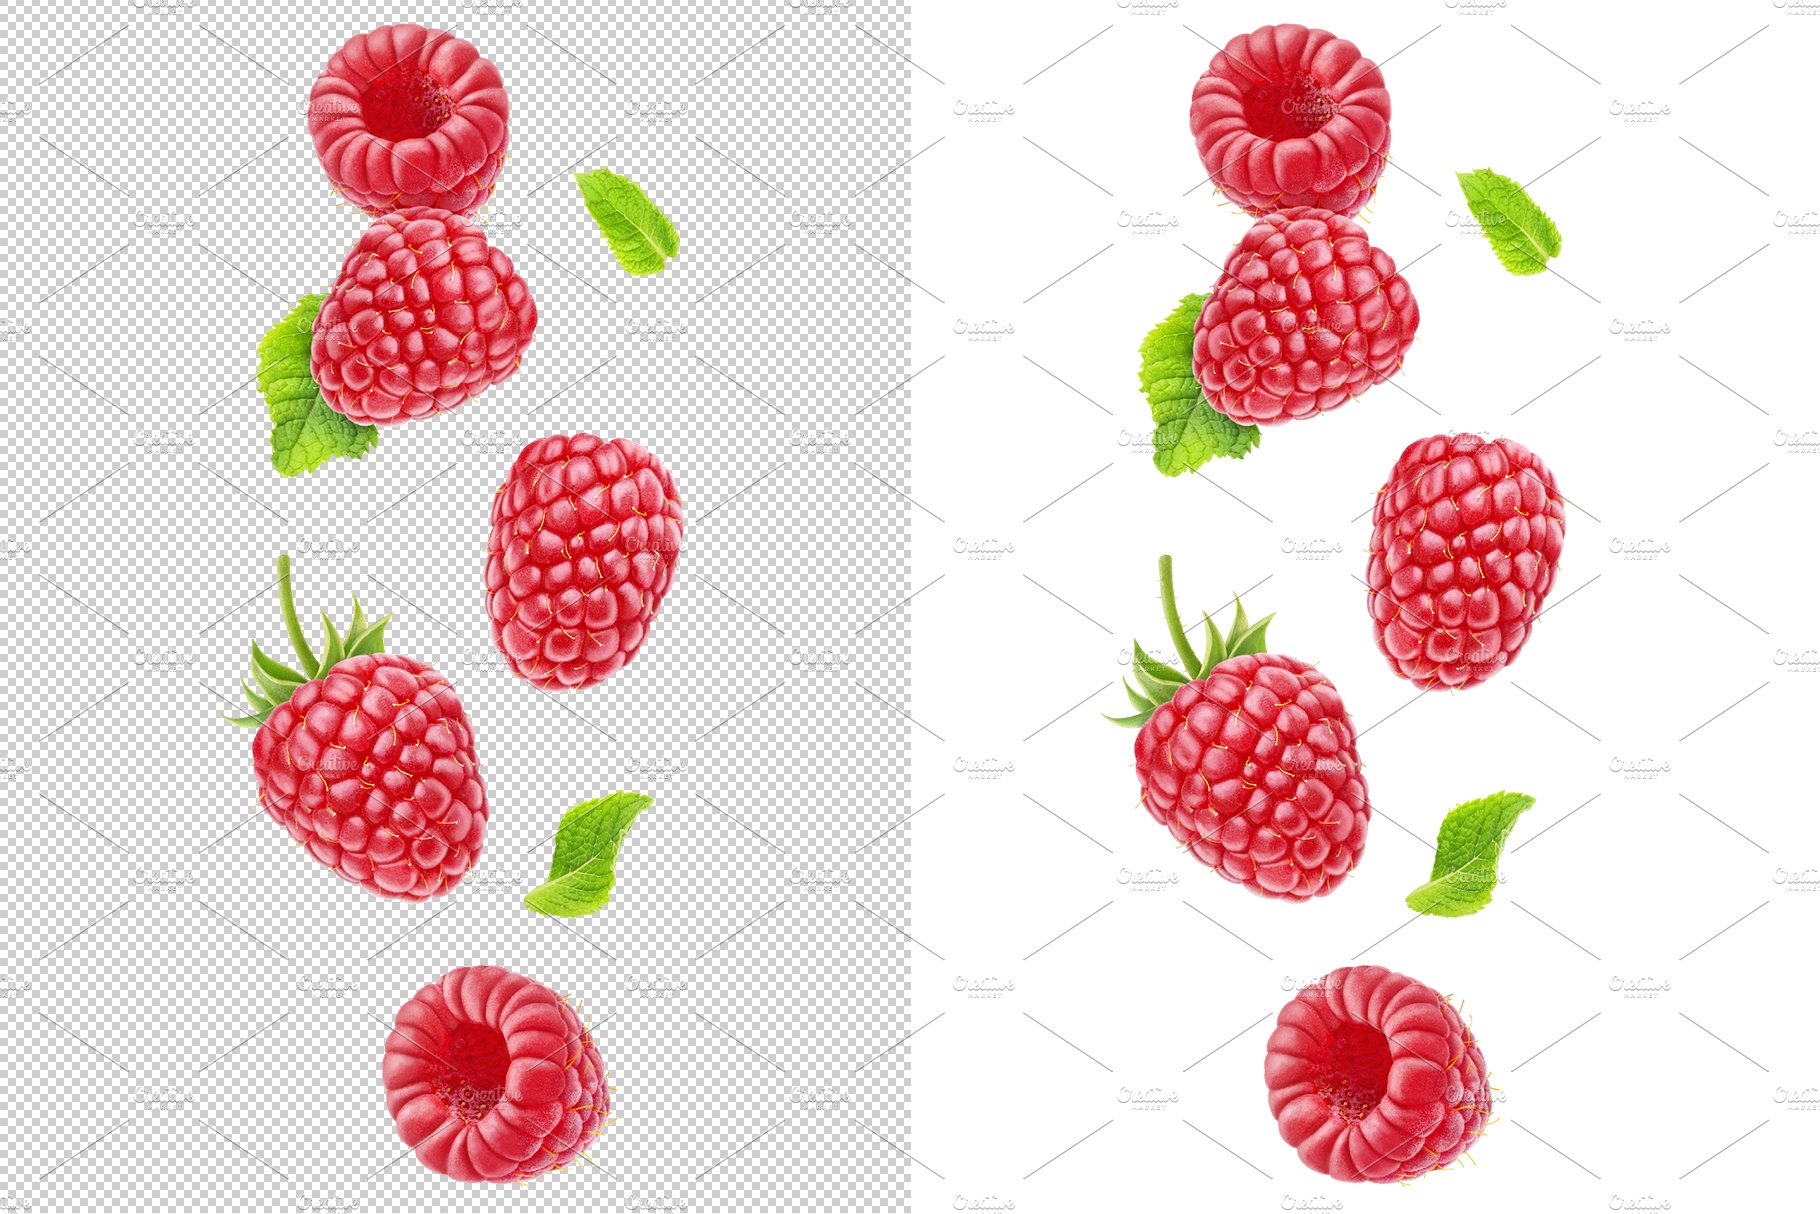 Falling raspberries cover image.